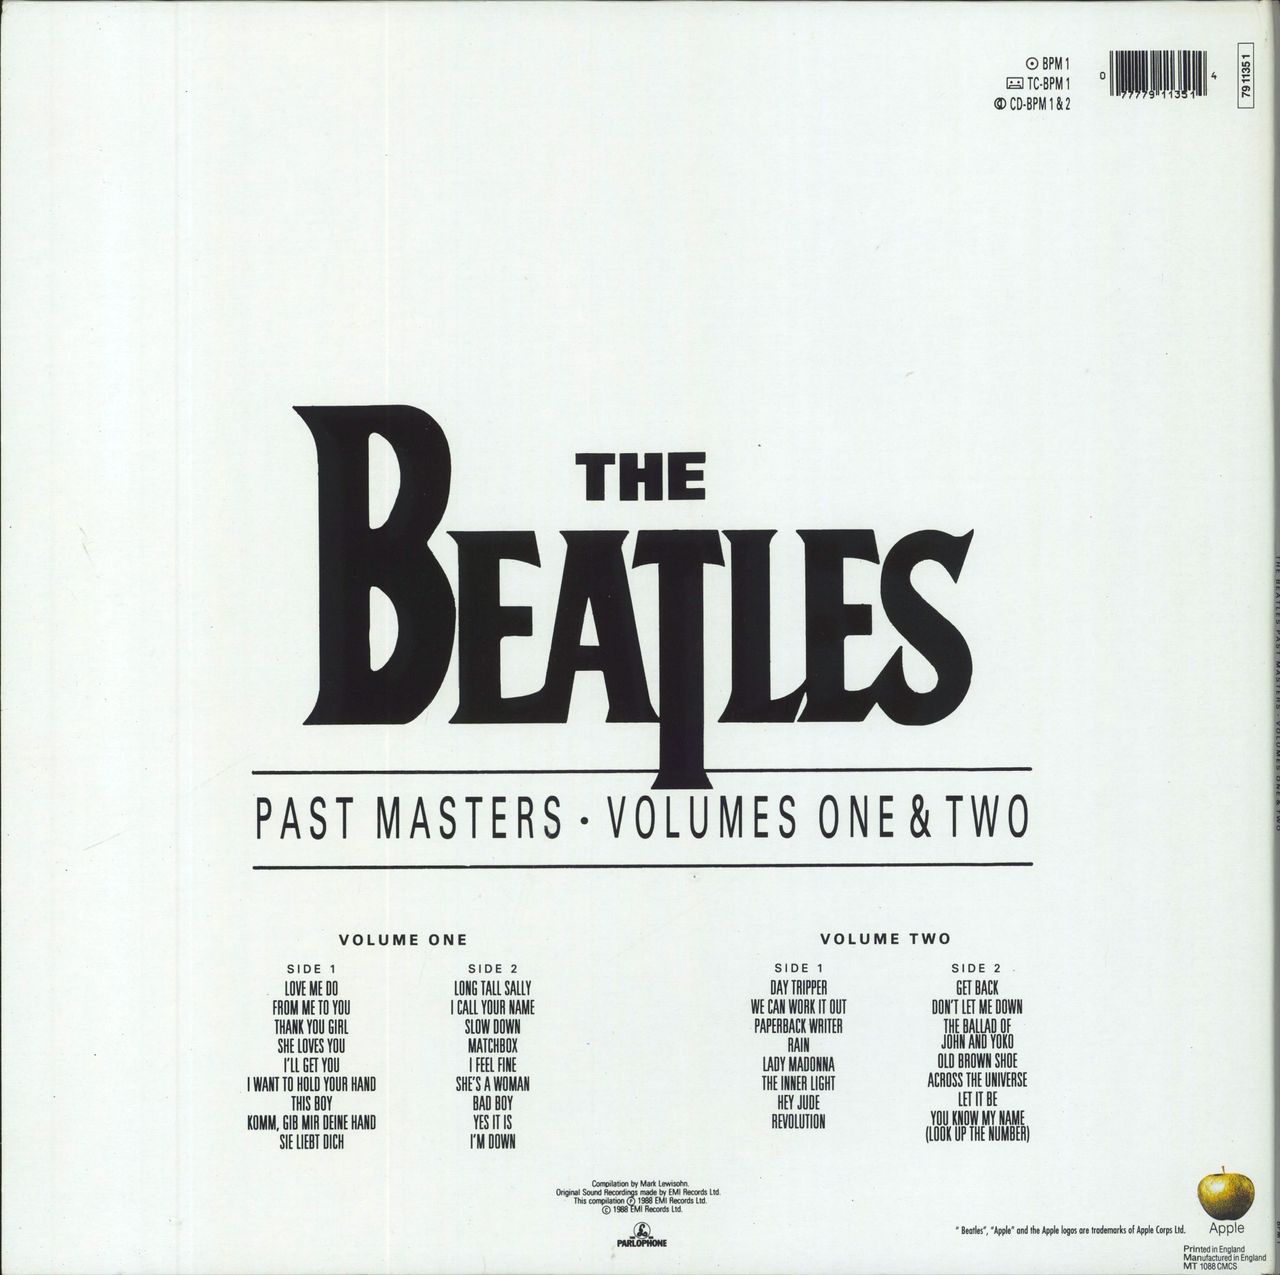 The Past Masters - Volumes & Two UK 2-LP vinyl set — RareVinyl.com